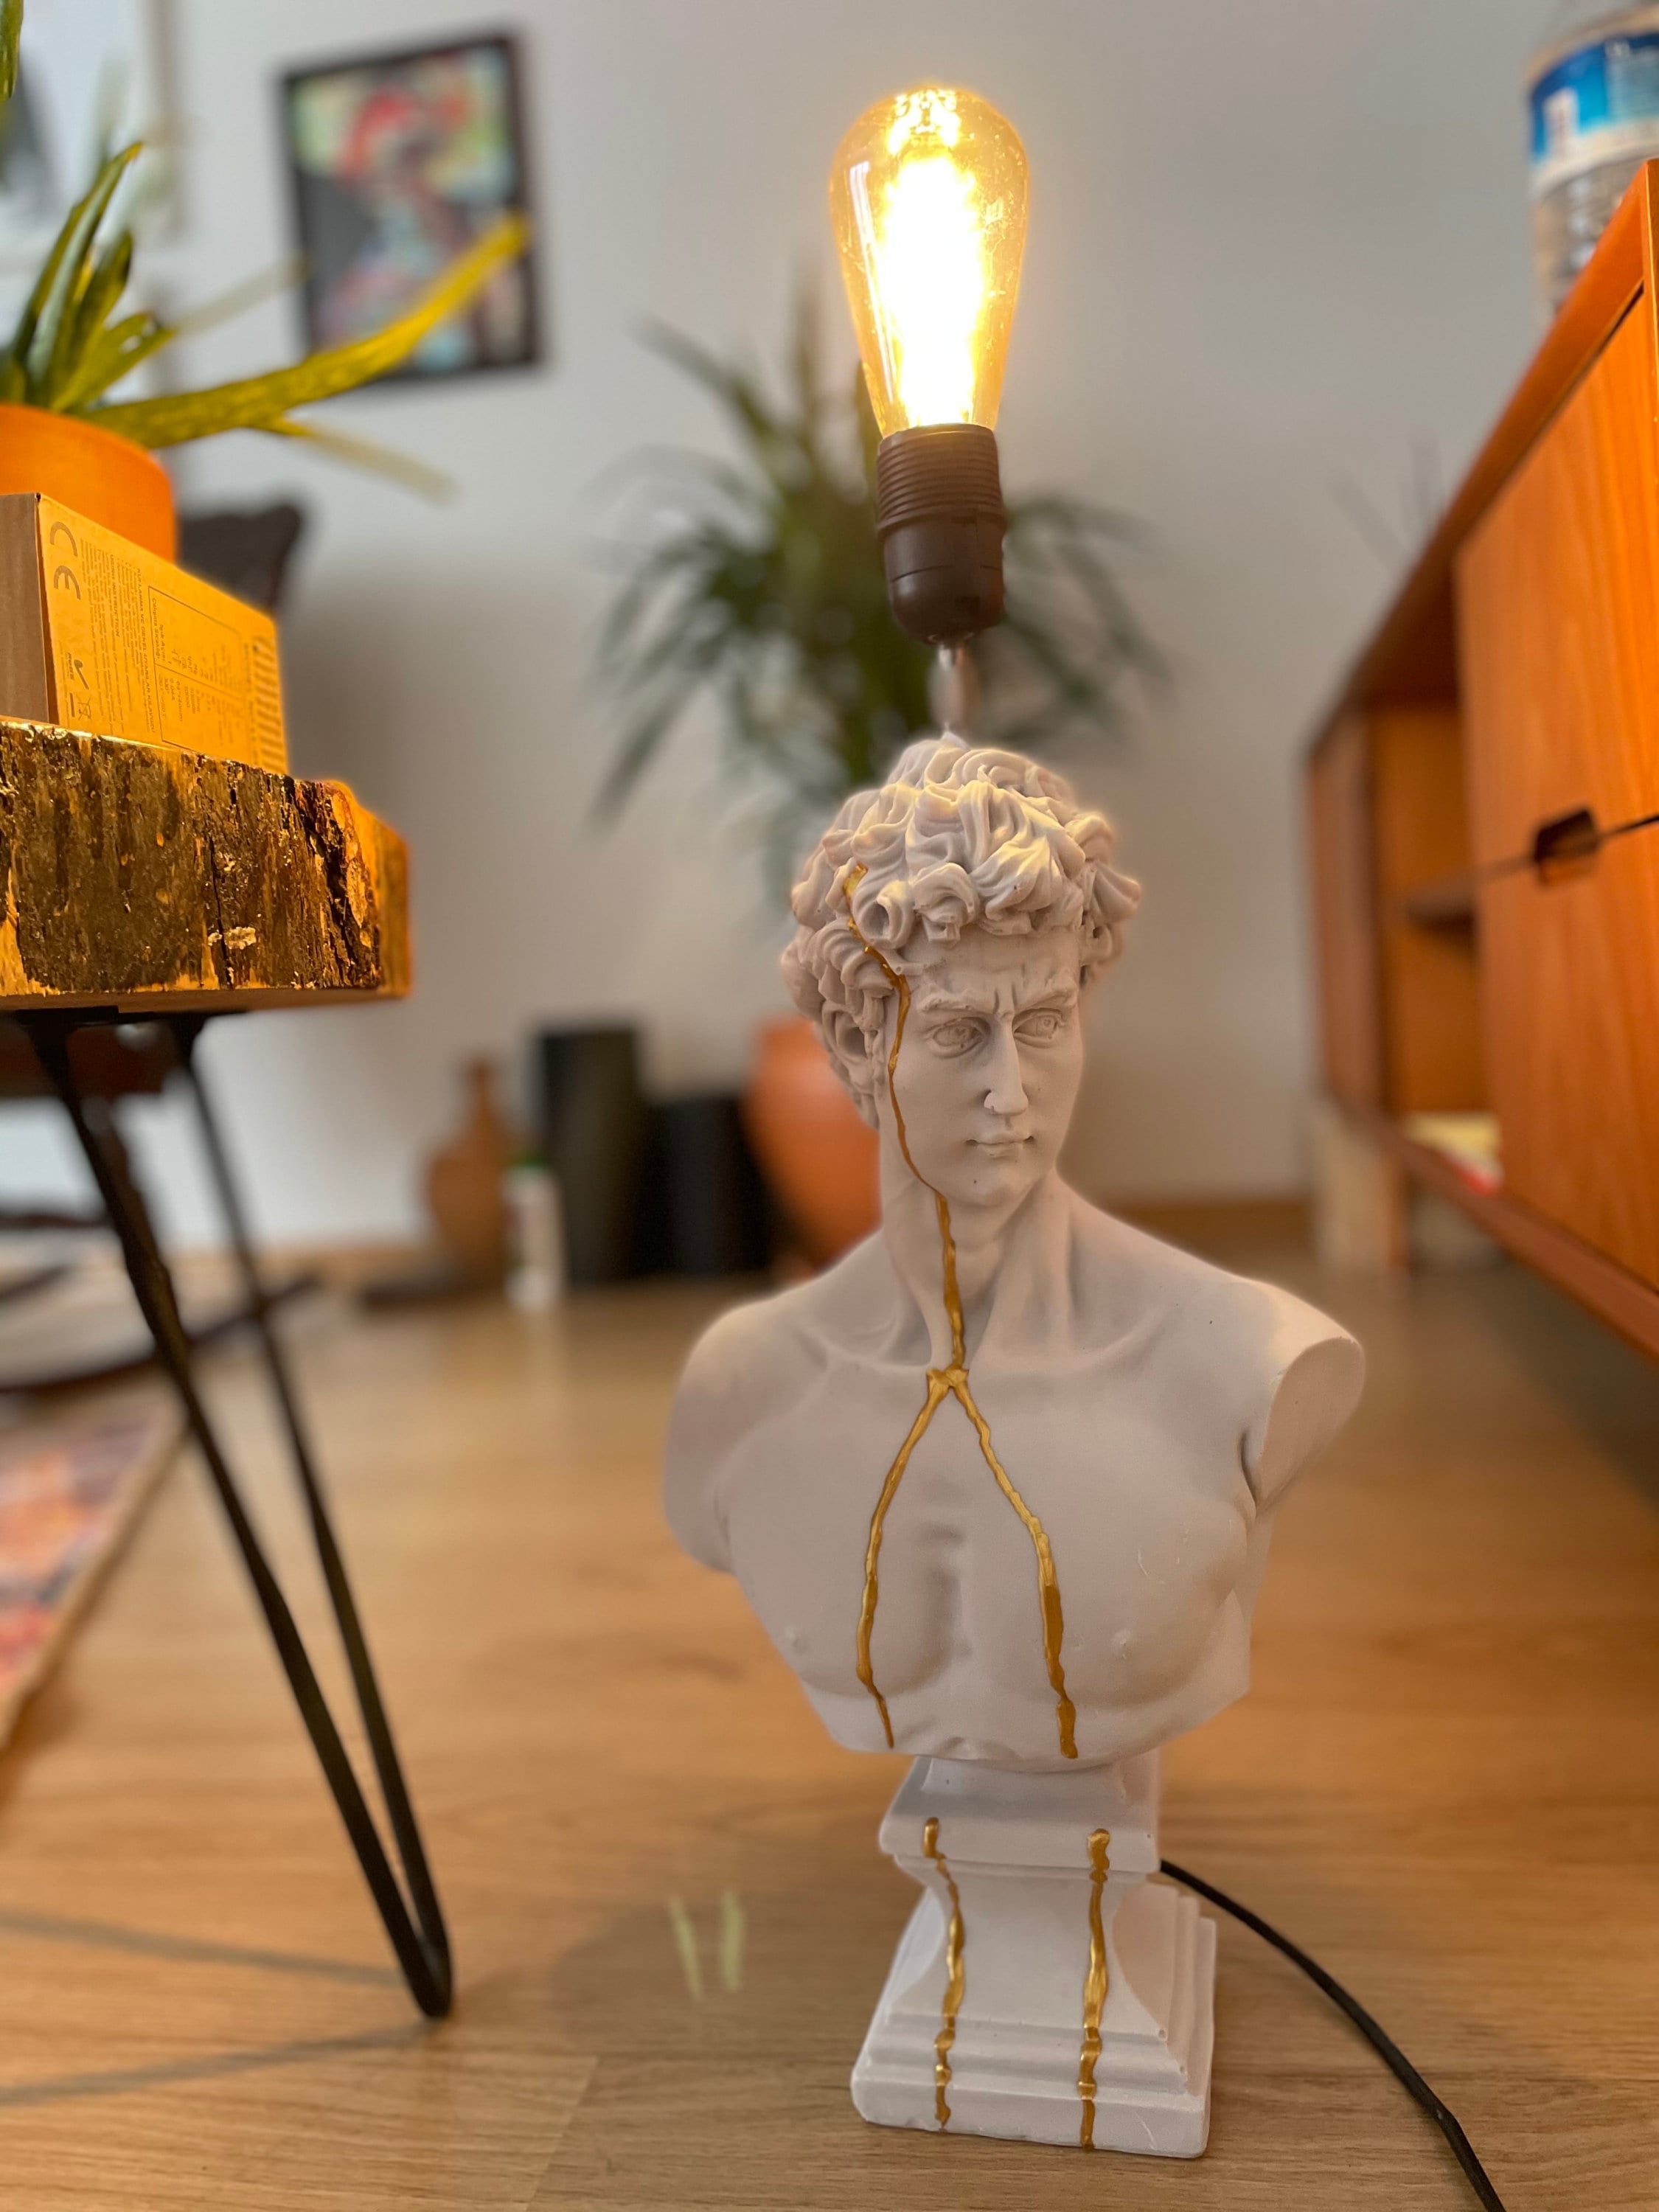 David Head Statue Lamp: Illuminating Renaissance Grandeur